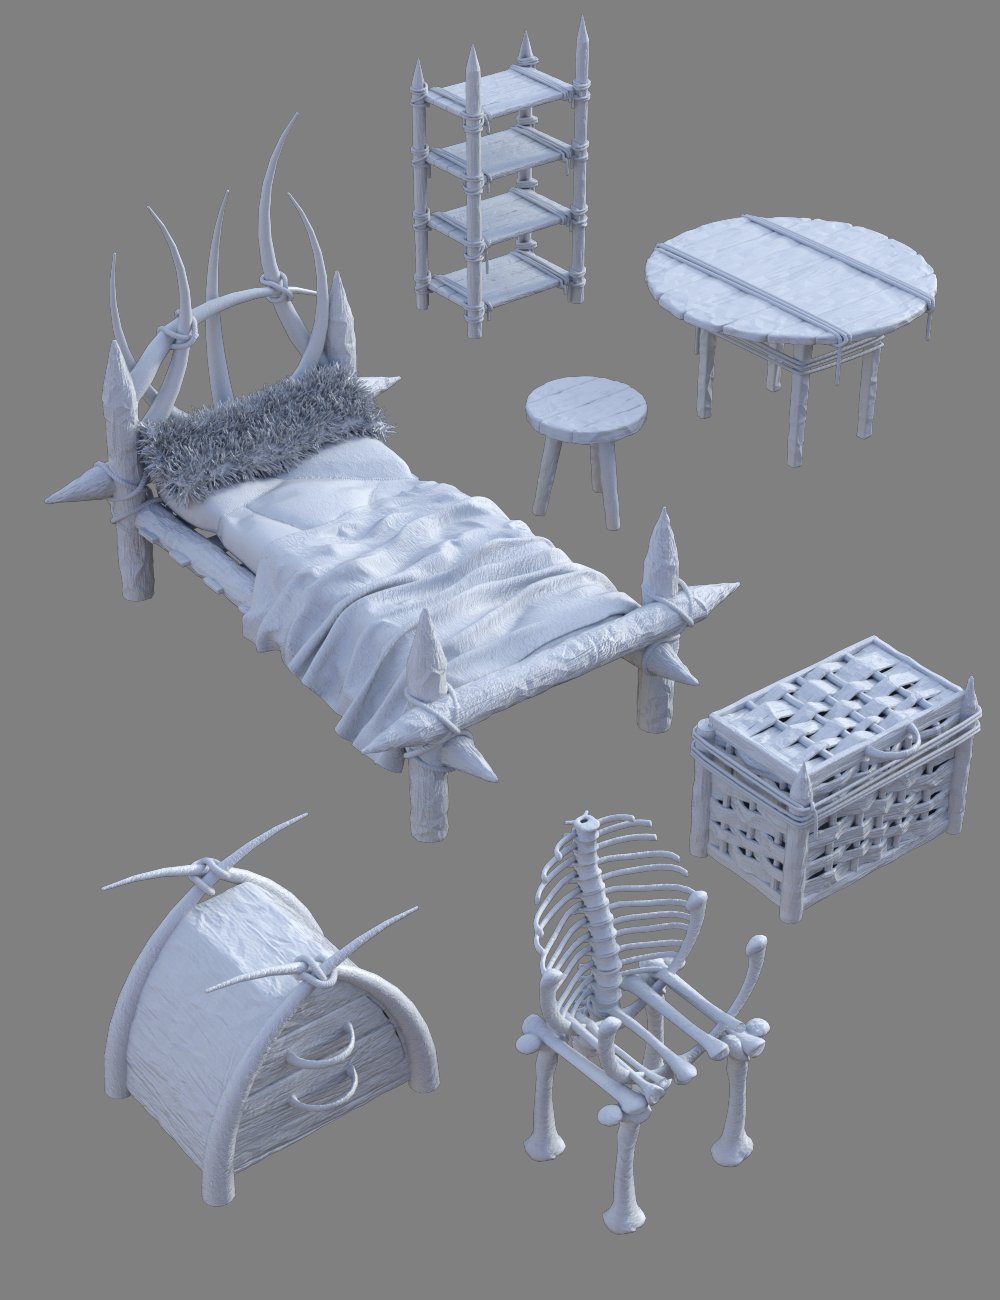 Orc Furniture by: Merlin Studios, 3D Models by Daz 3D